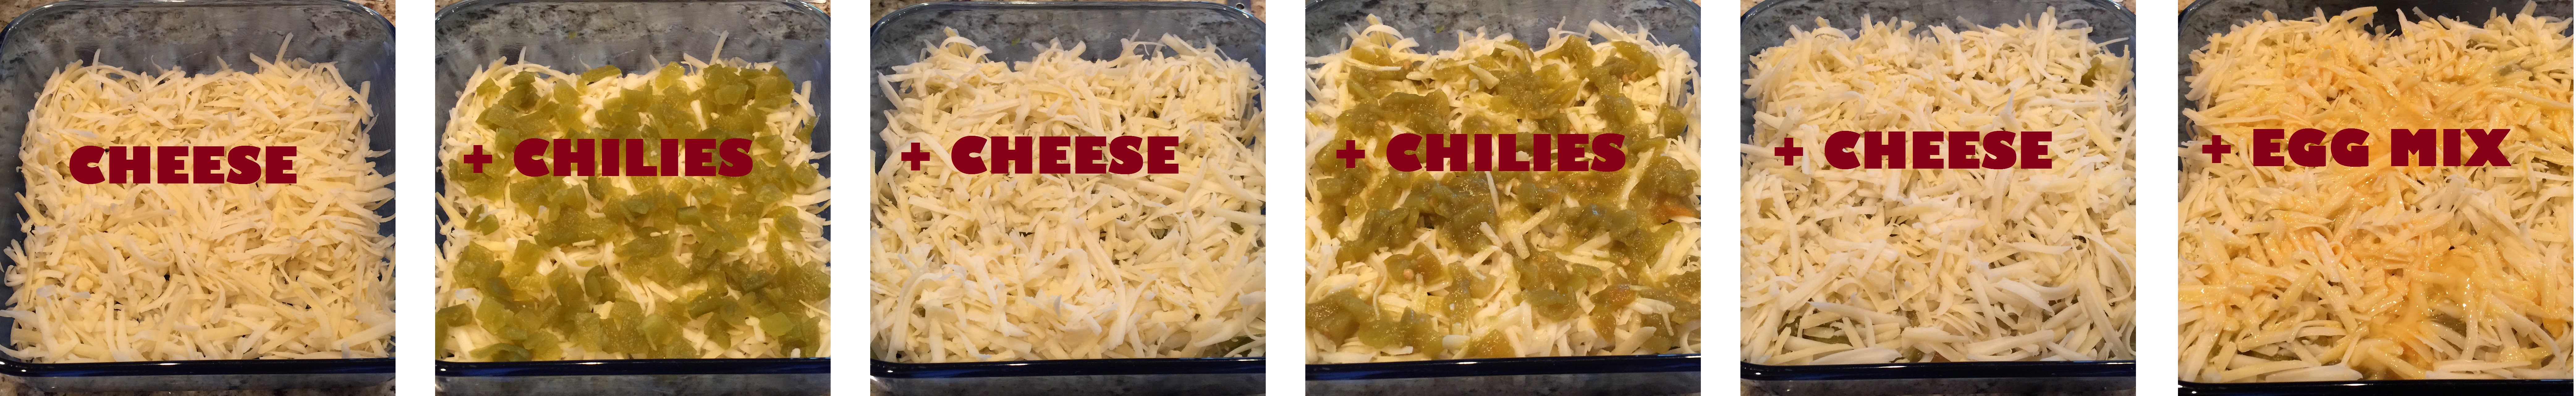 chili-cheese-direction